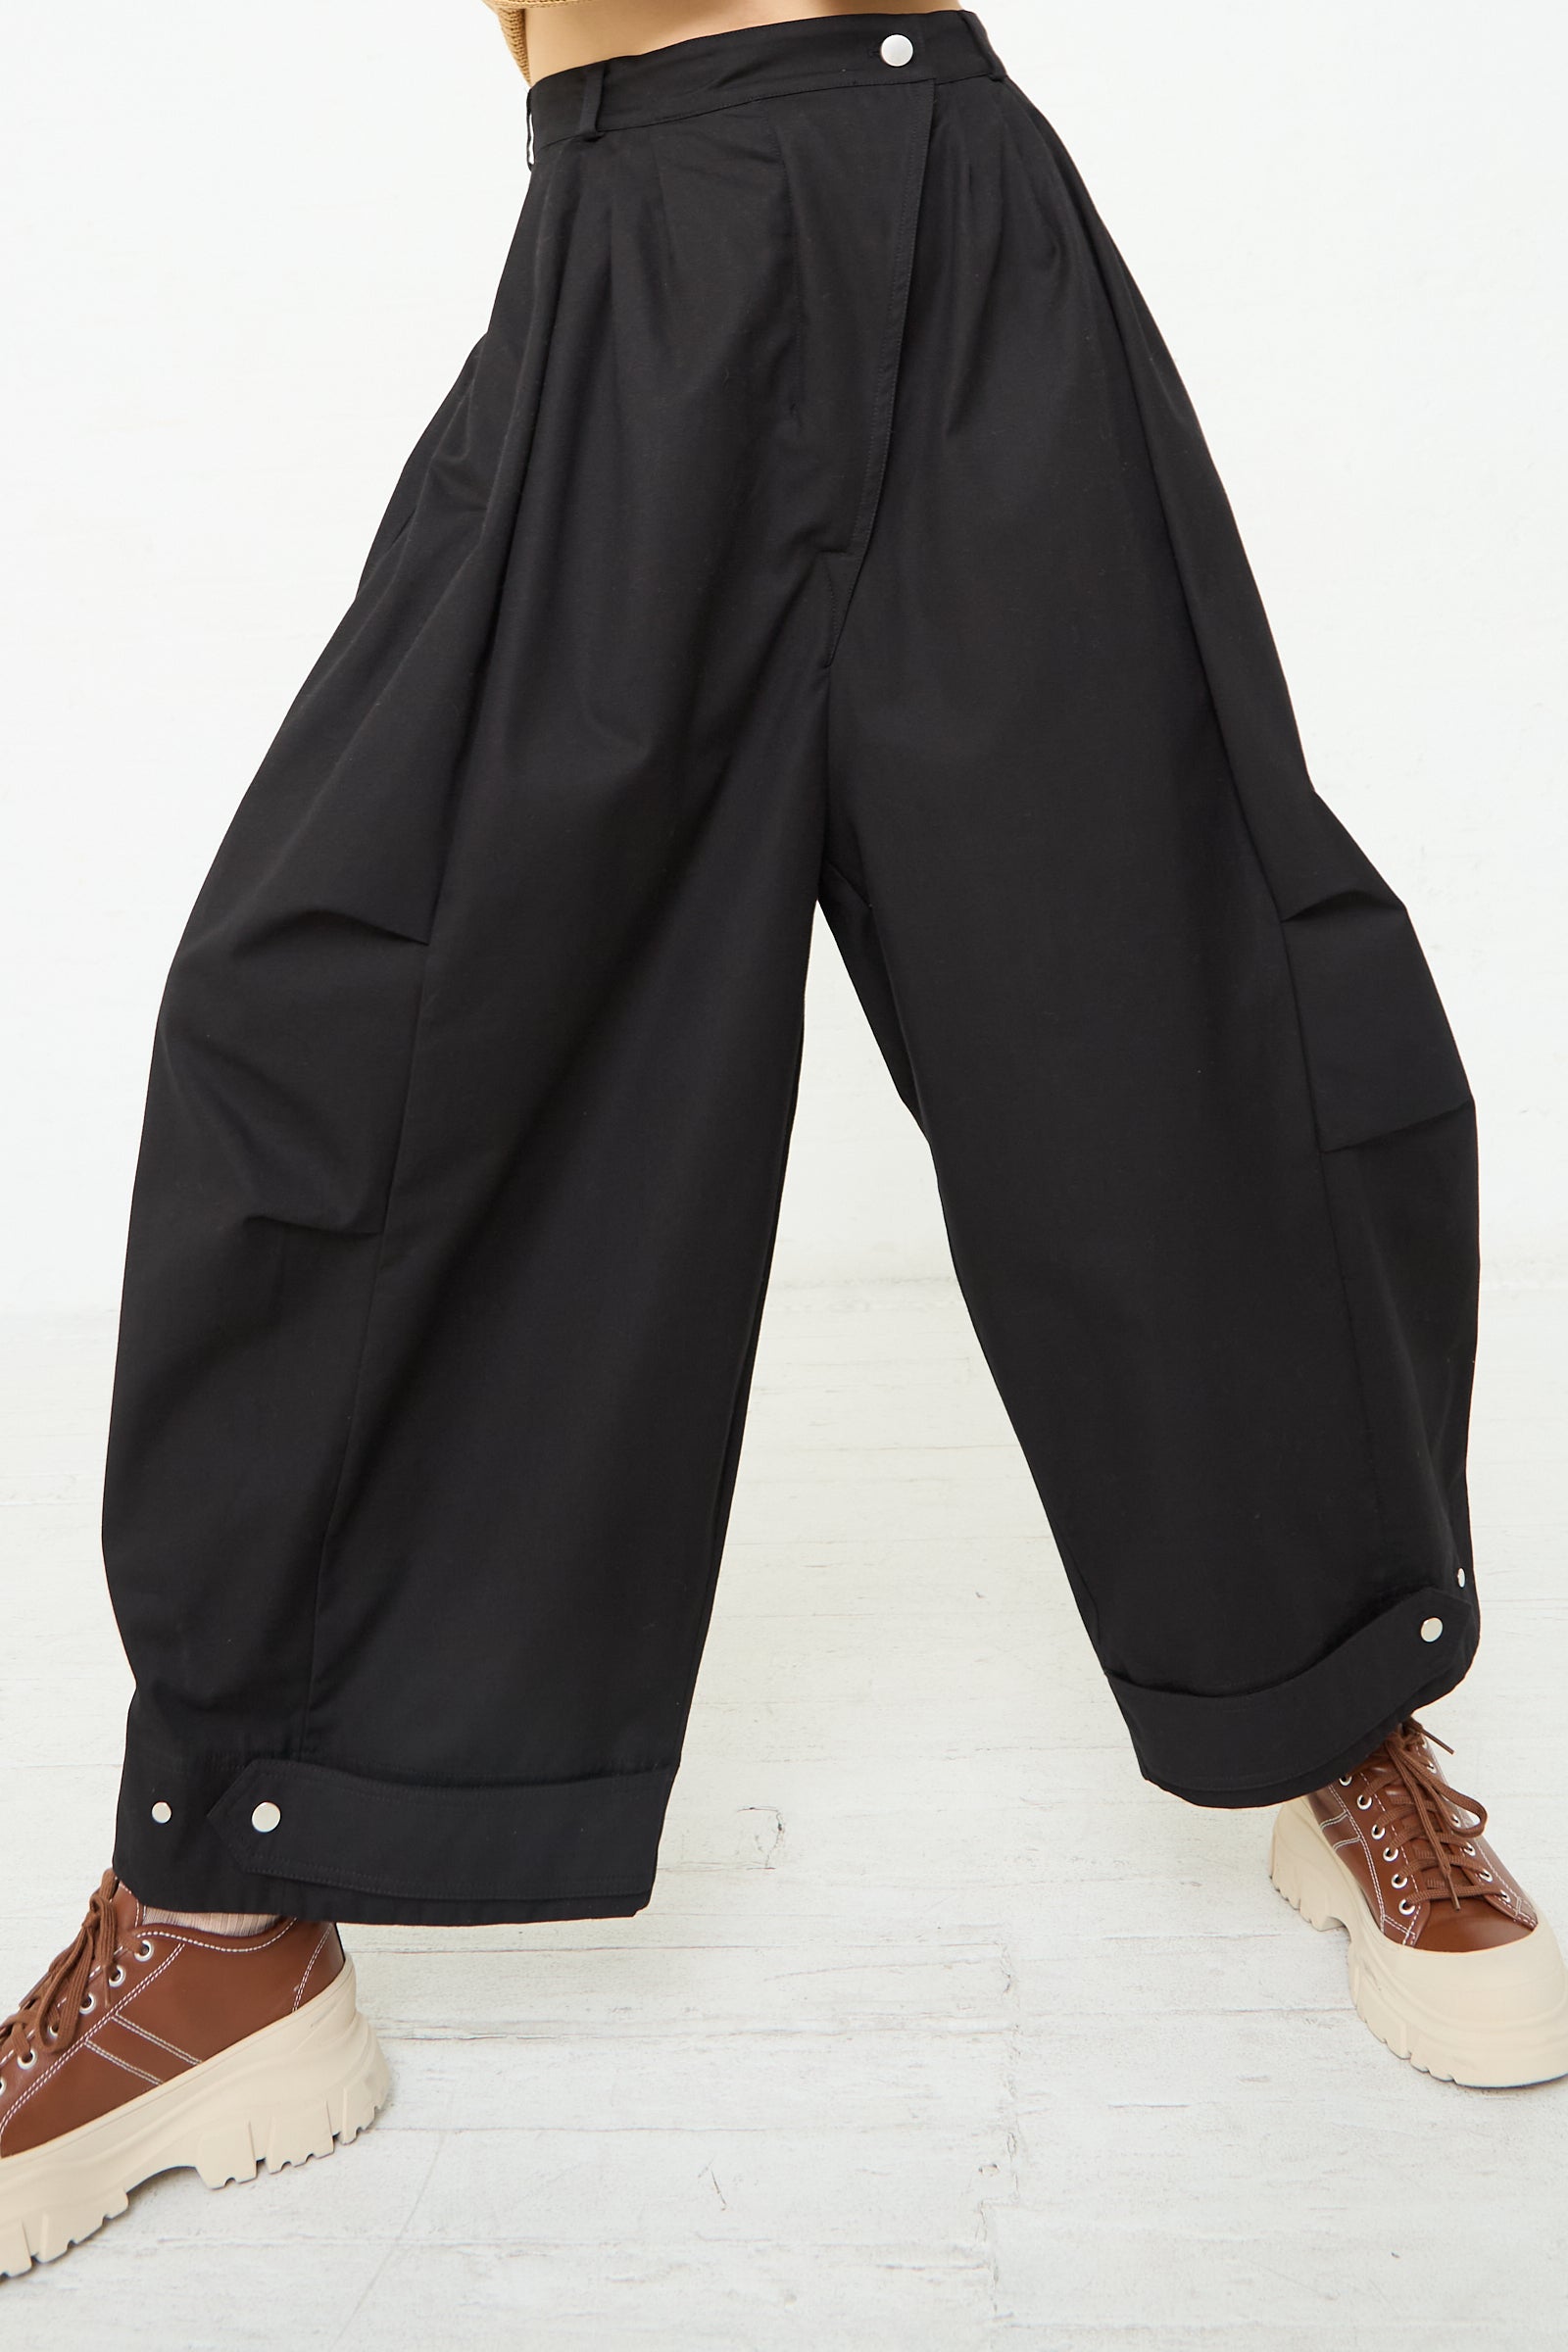 A woman wearing a pair of Niccolò Pasqualetti designer black wide leg pants in Cotton Twill Luna Trouser.